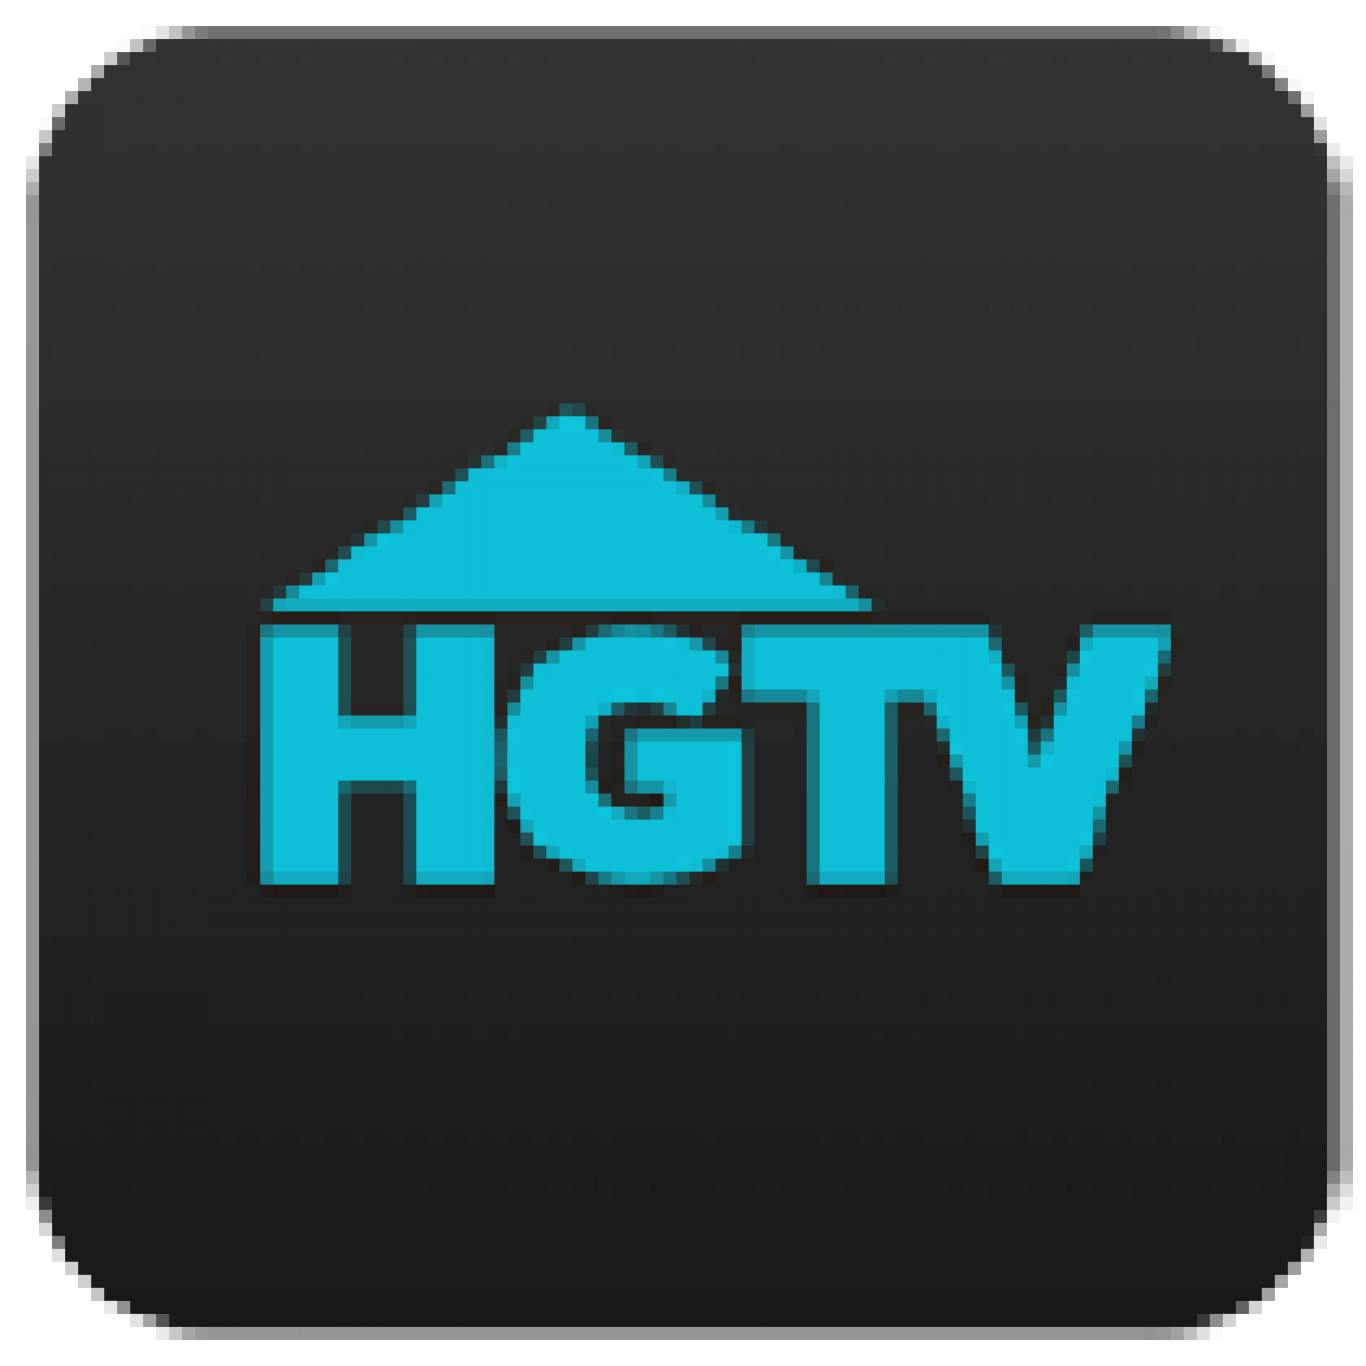 HG TV